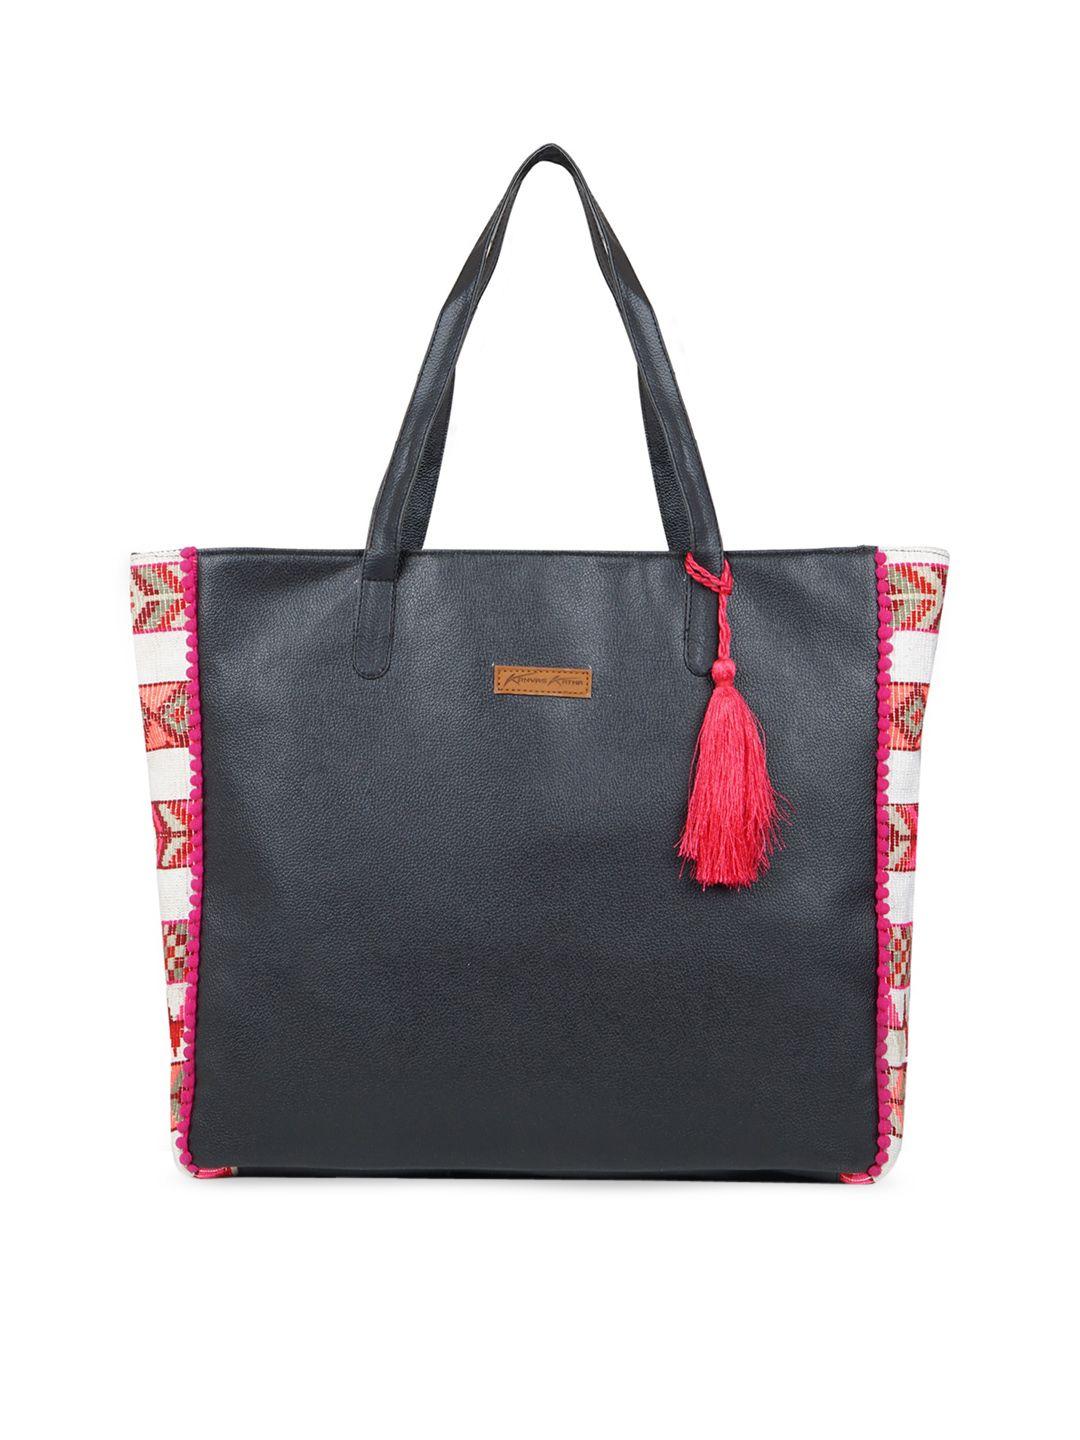 kanvas katha black colourblocked pu oversized shopper handheld bag with tasselled